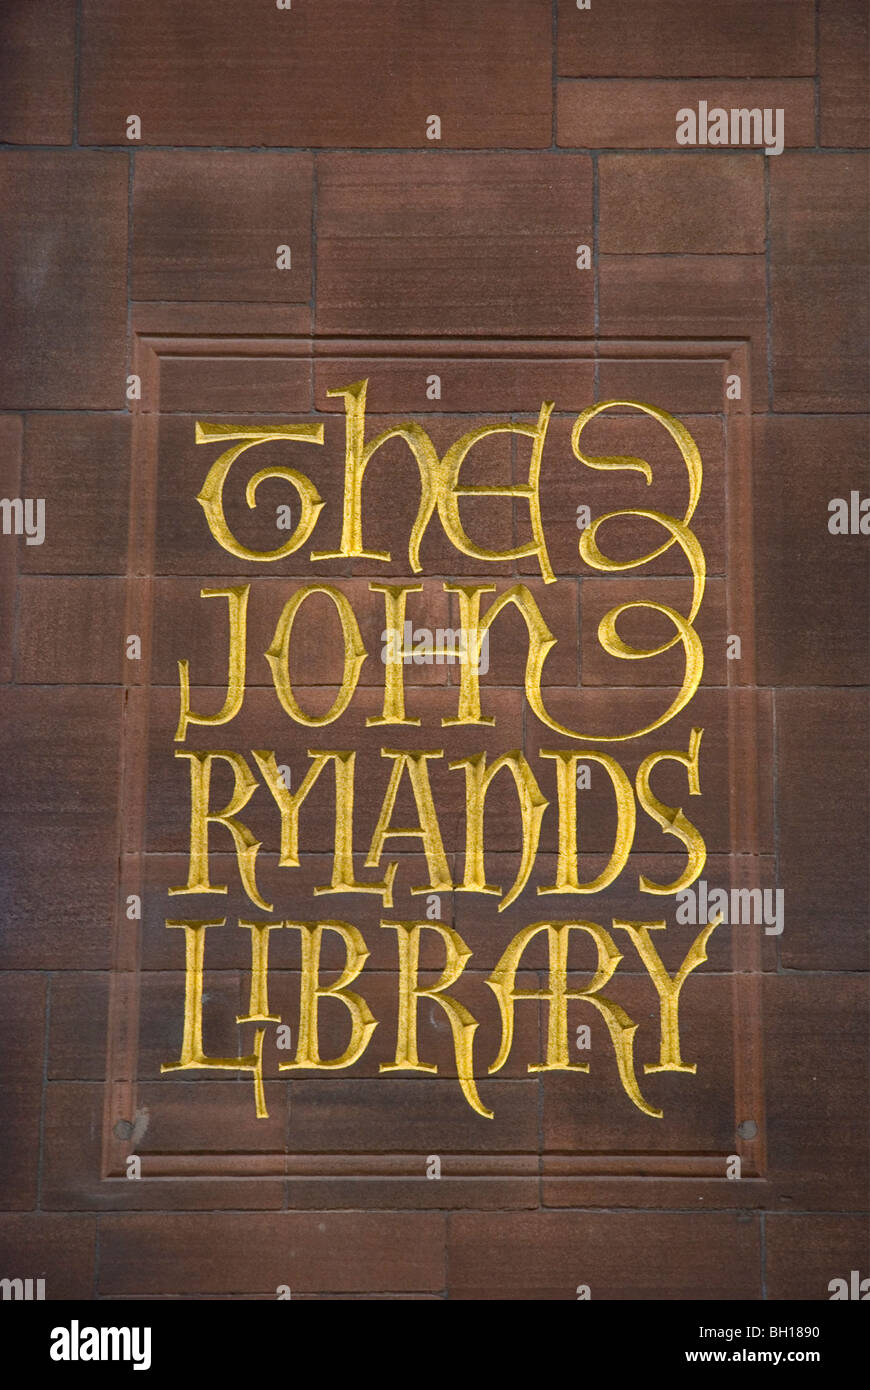 John Rylands Library Zeichen Spinningfields Bezirk Manchester England UK Mitteleuropa Stockfoto